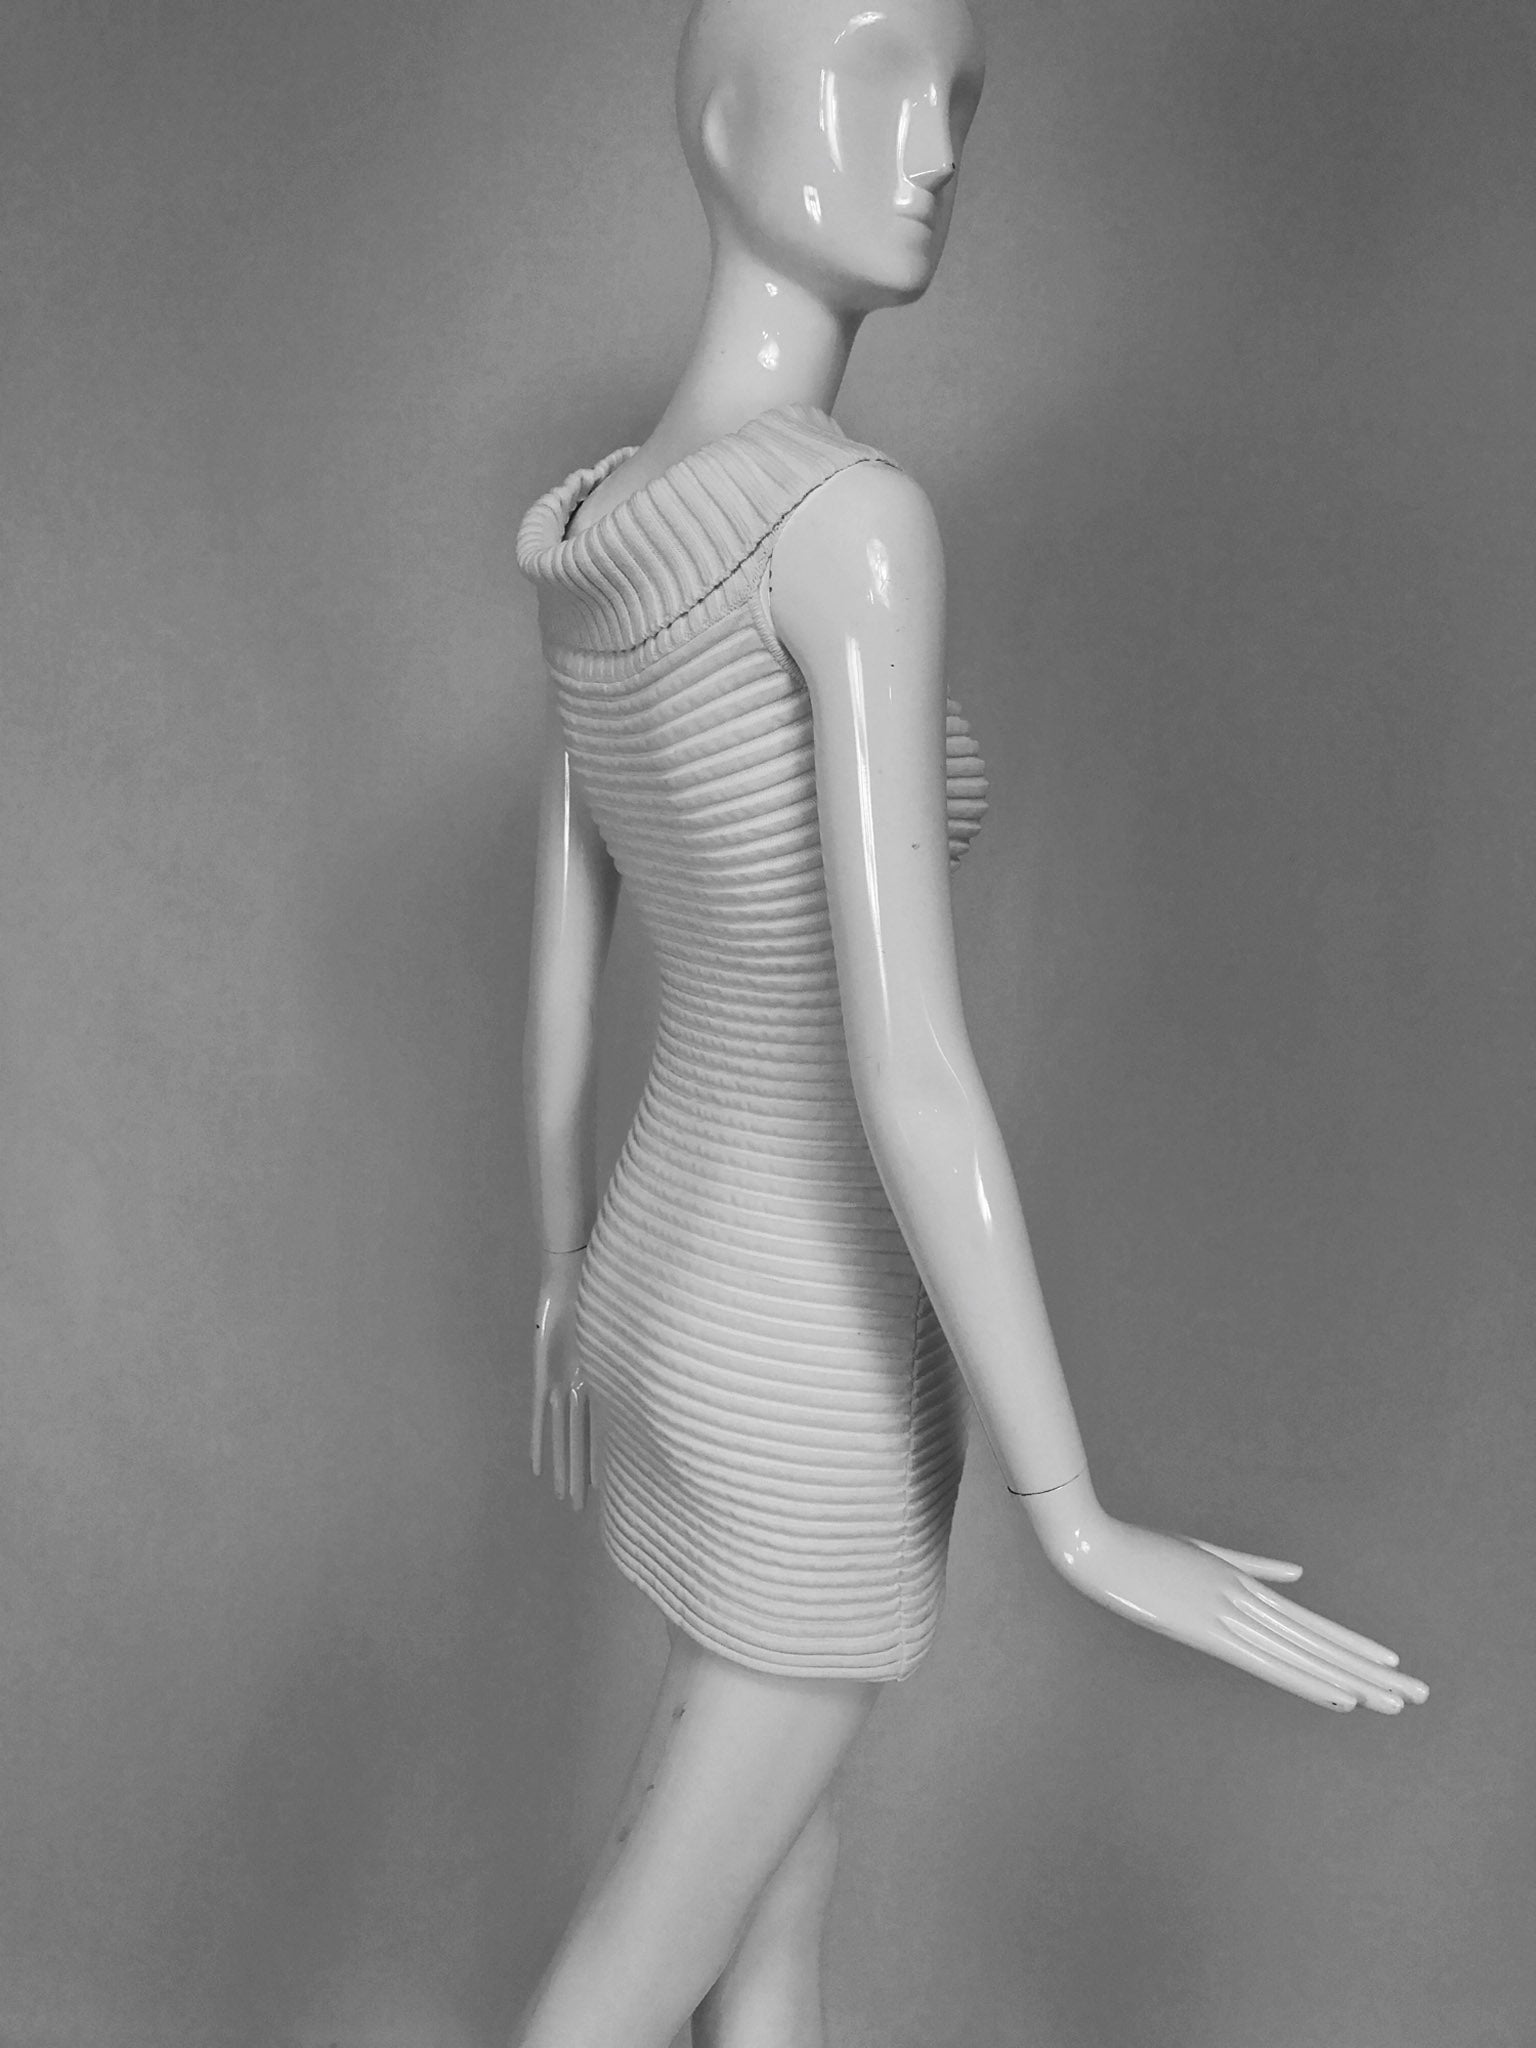 SOLD Chanel White Rib Knit Cowl Neck Bandage Dress 2009 – Palm Beach Vintage